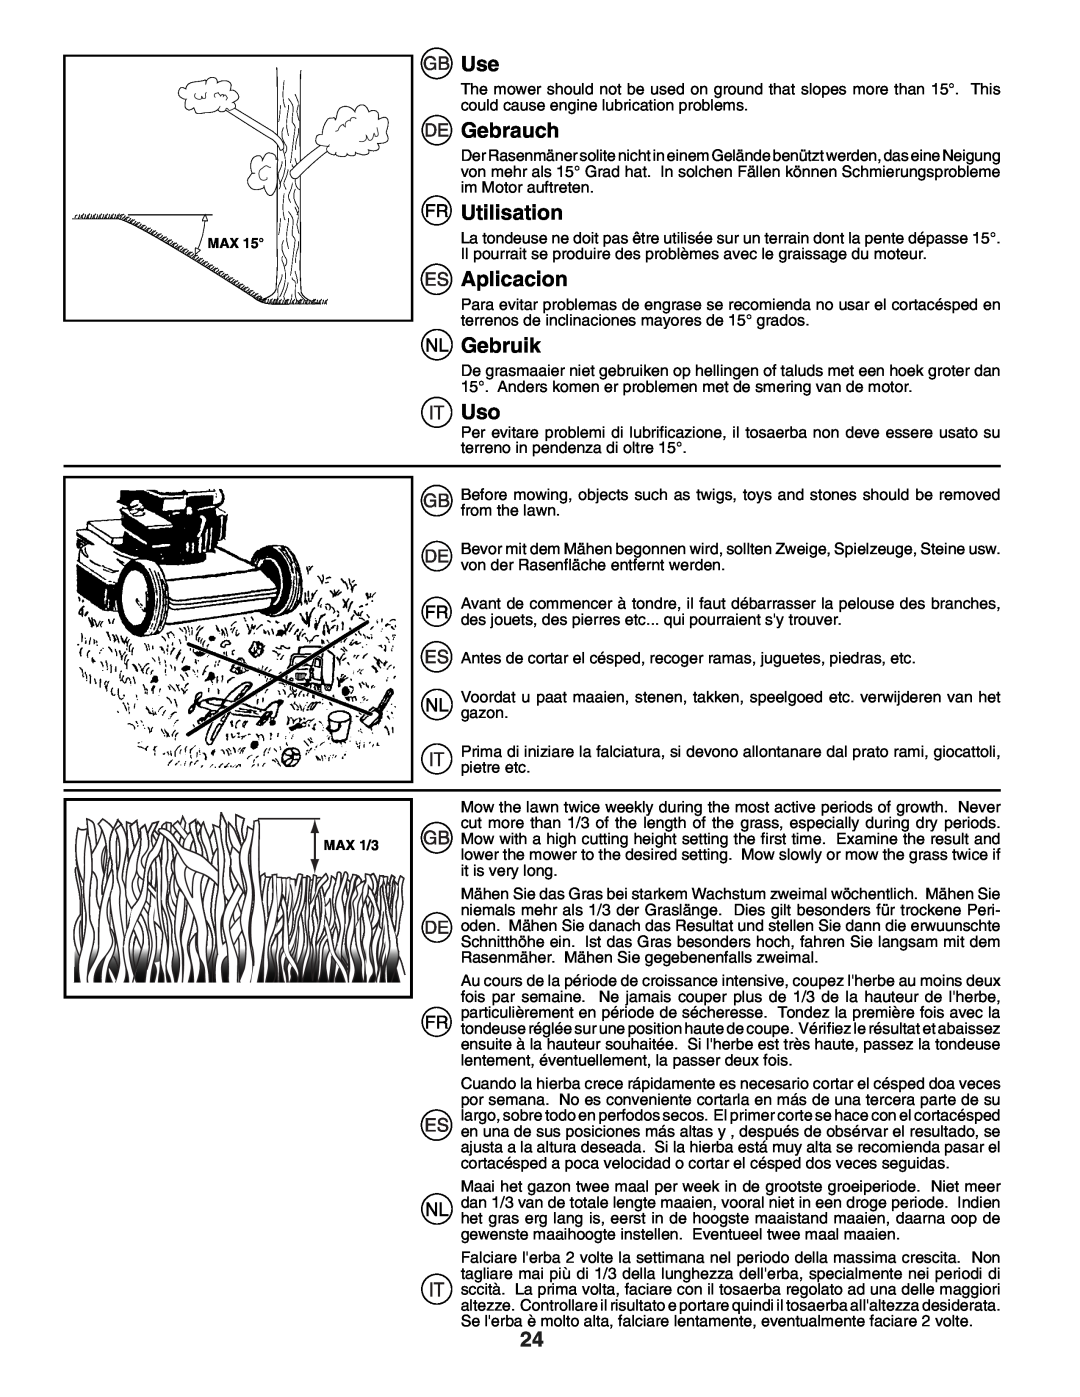 Husqvarna J50R instruction manual Gebrauch, Utilisation, Aplicacion, Gebruik, MAX 1/3 